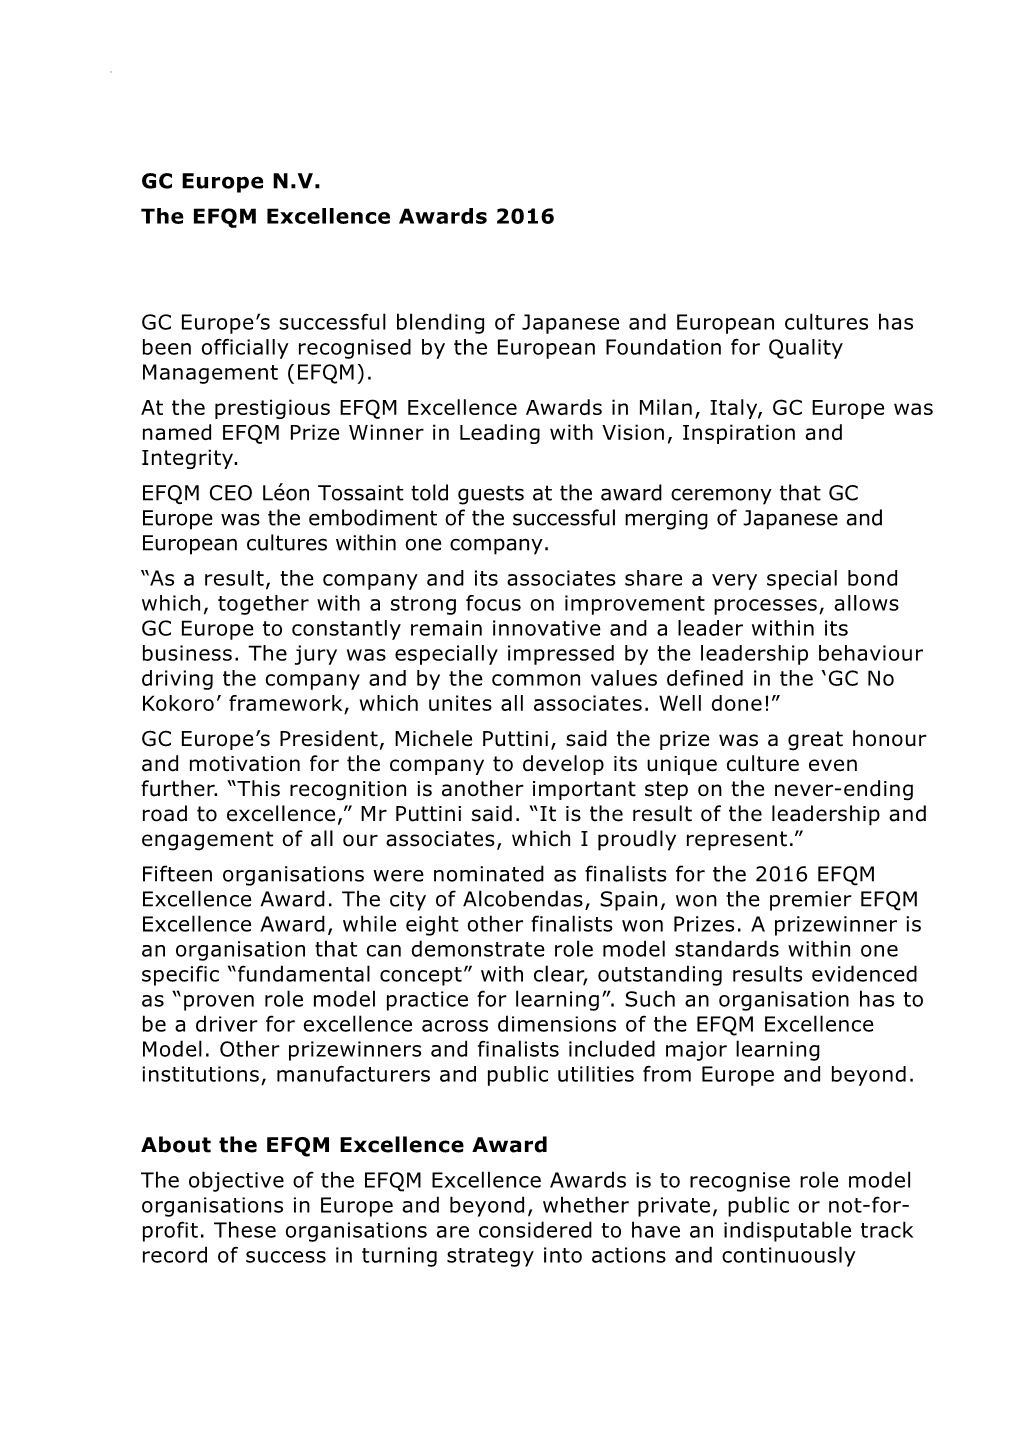 The EFQM Excellence Awards 2016